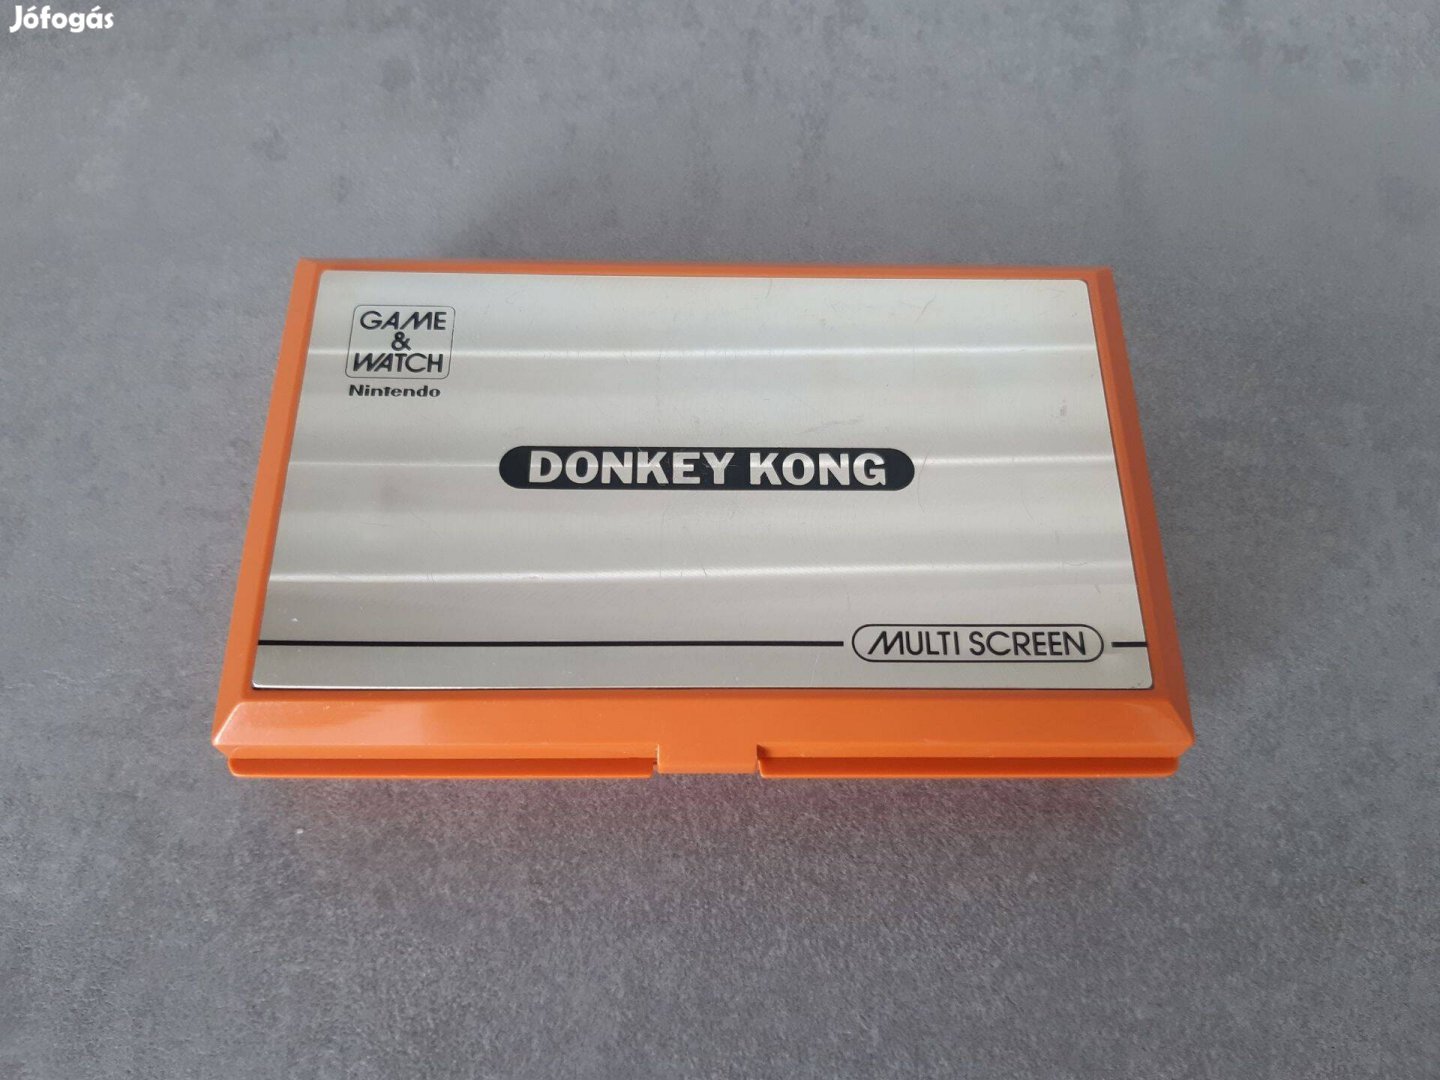 Nintendo Game & Watch Donkey Kong (DK-52) Multi Screen (1983) Tesztel